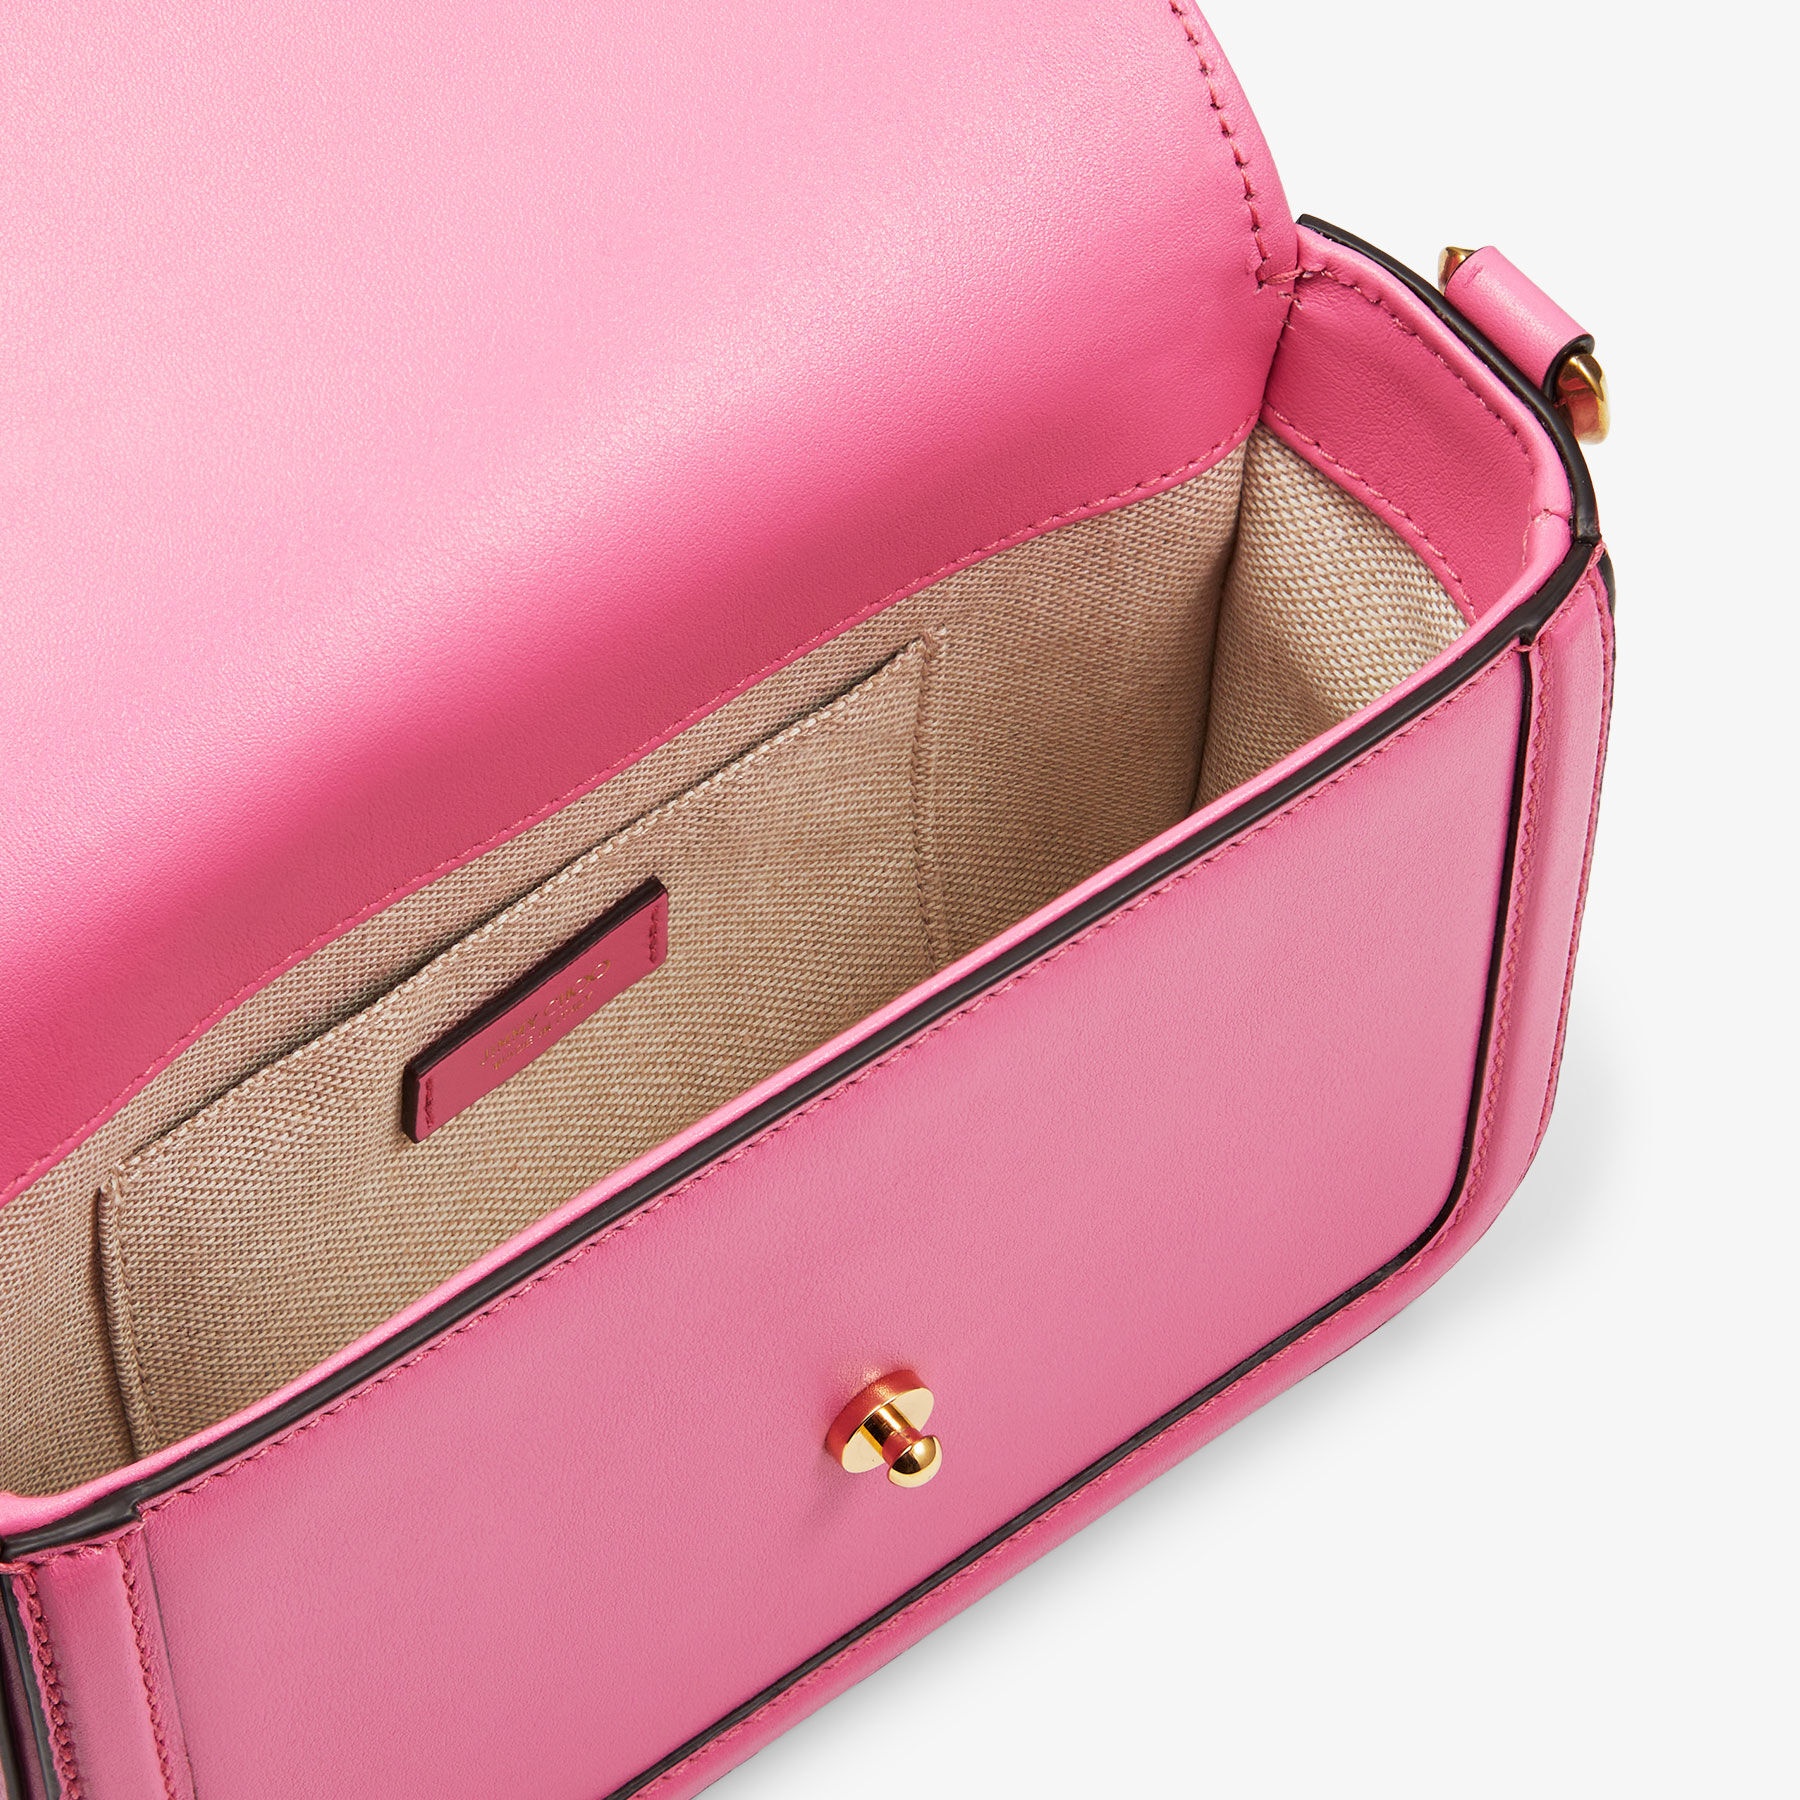 Diamond Crossbody
Candy Pink Smooth Calf Leather Top Handle Bag - 4